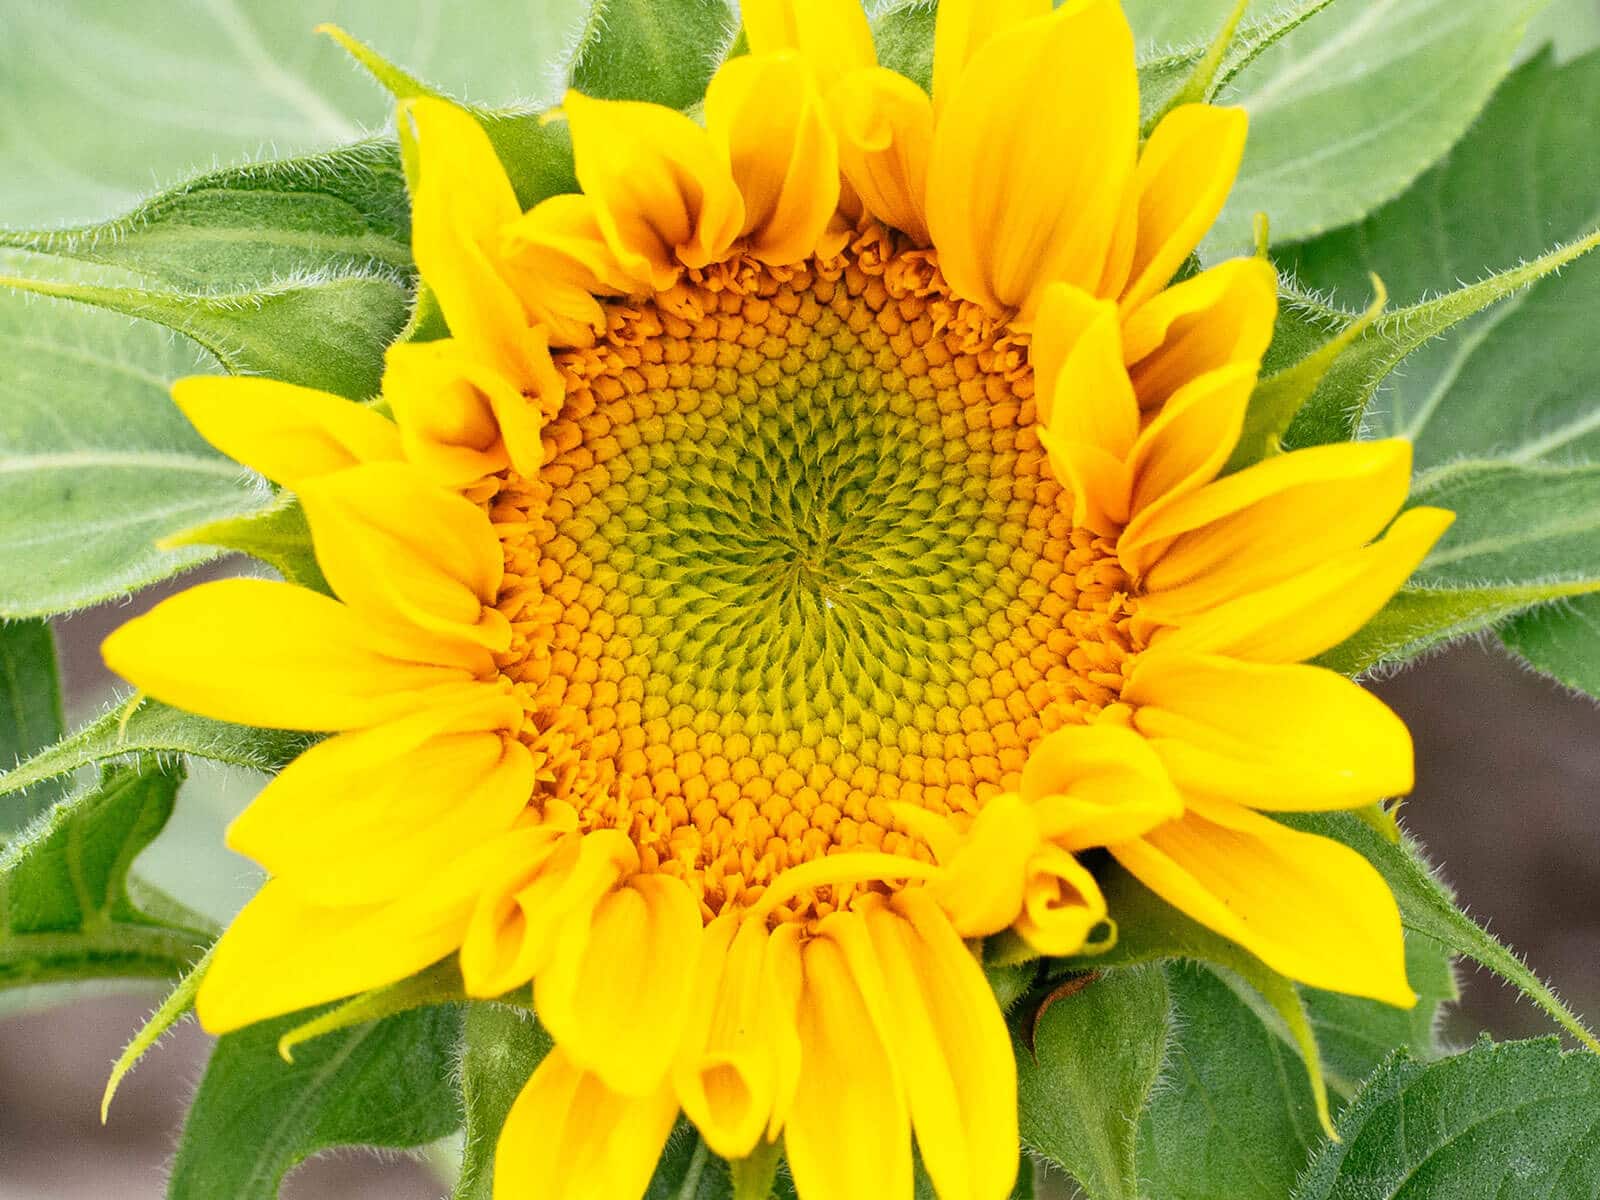 Fibonacci spirals on a sunflower